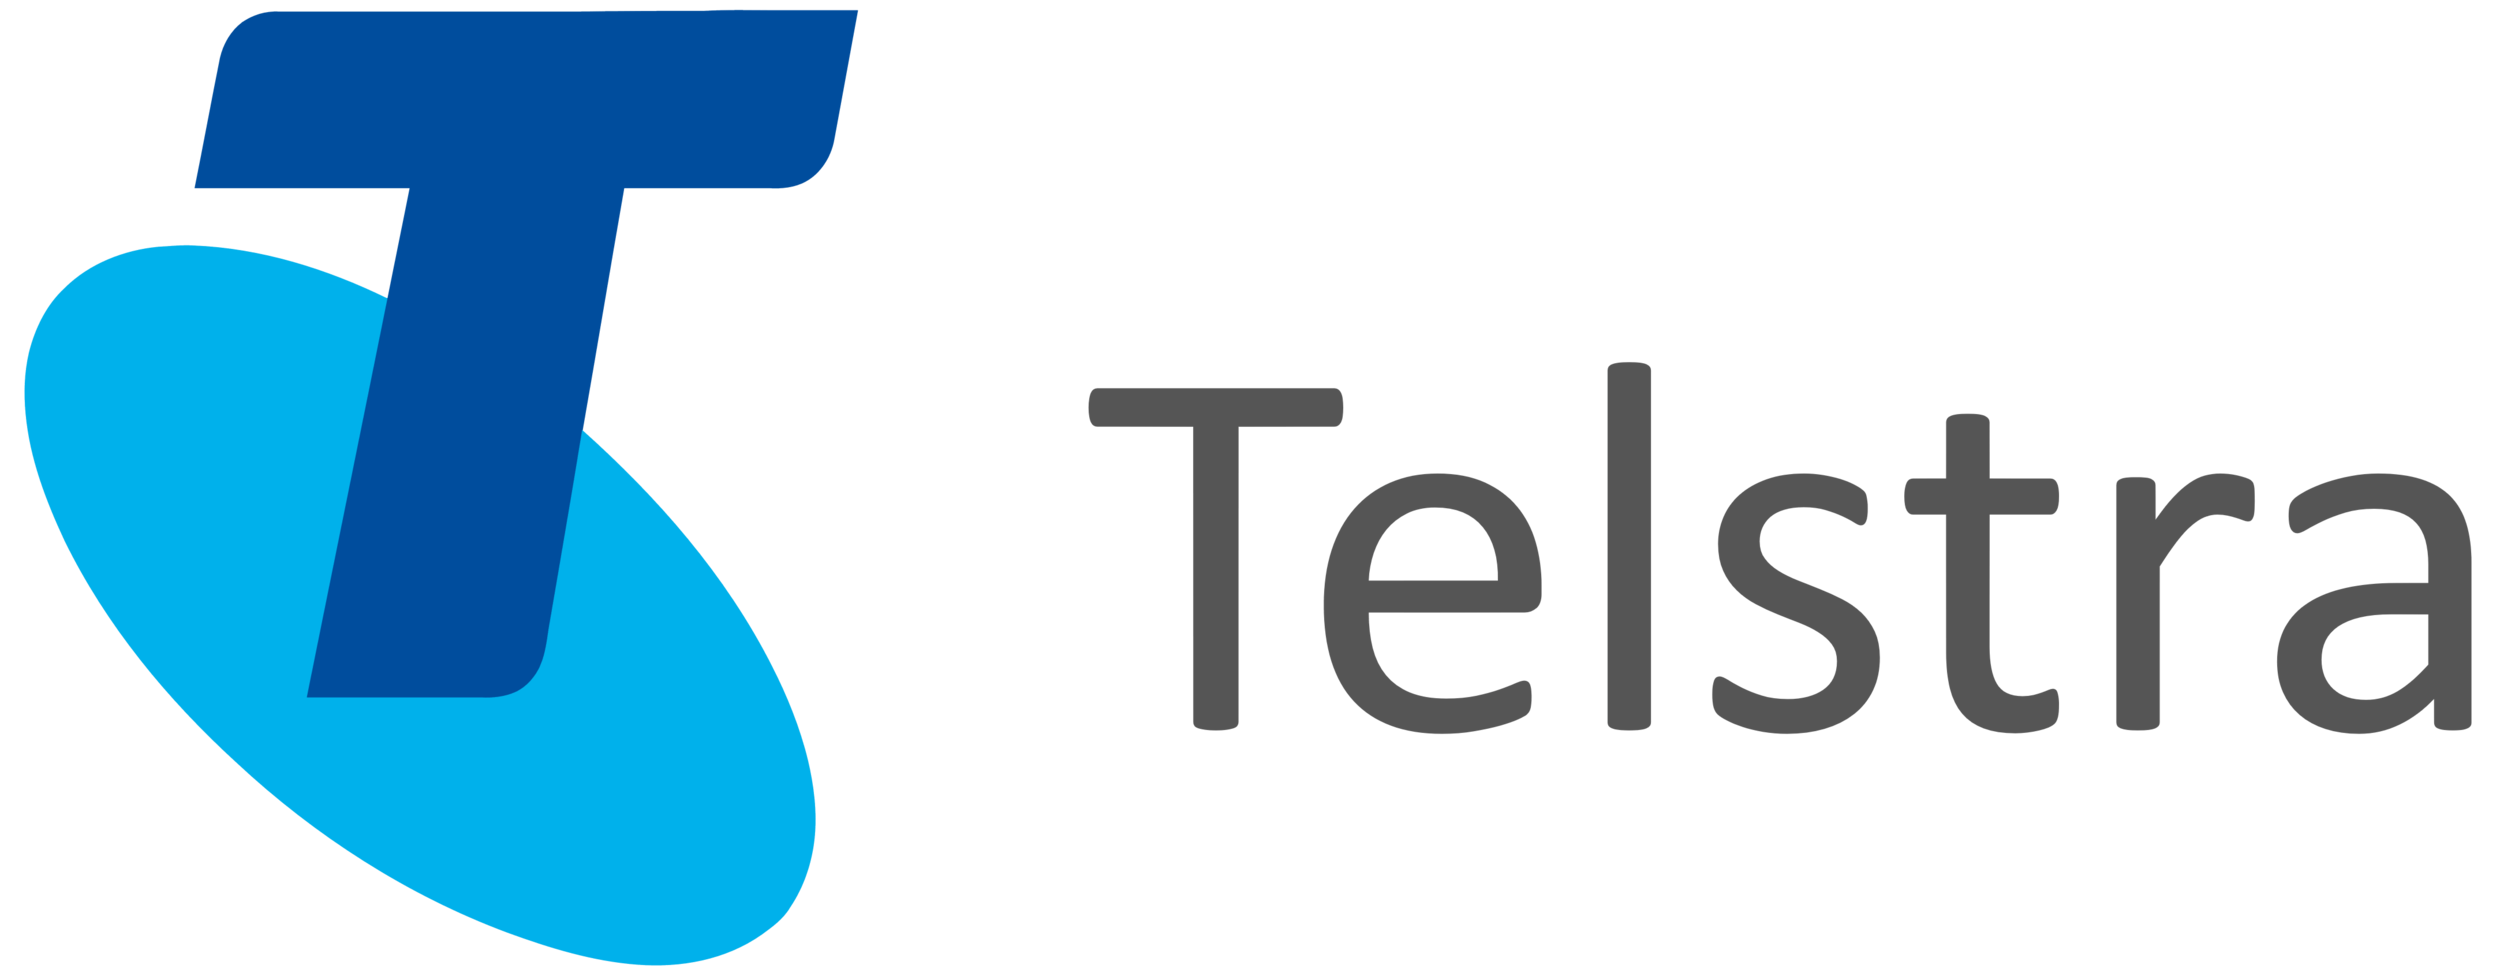 Telstra Client List Logo | Studio 2 You.png